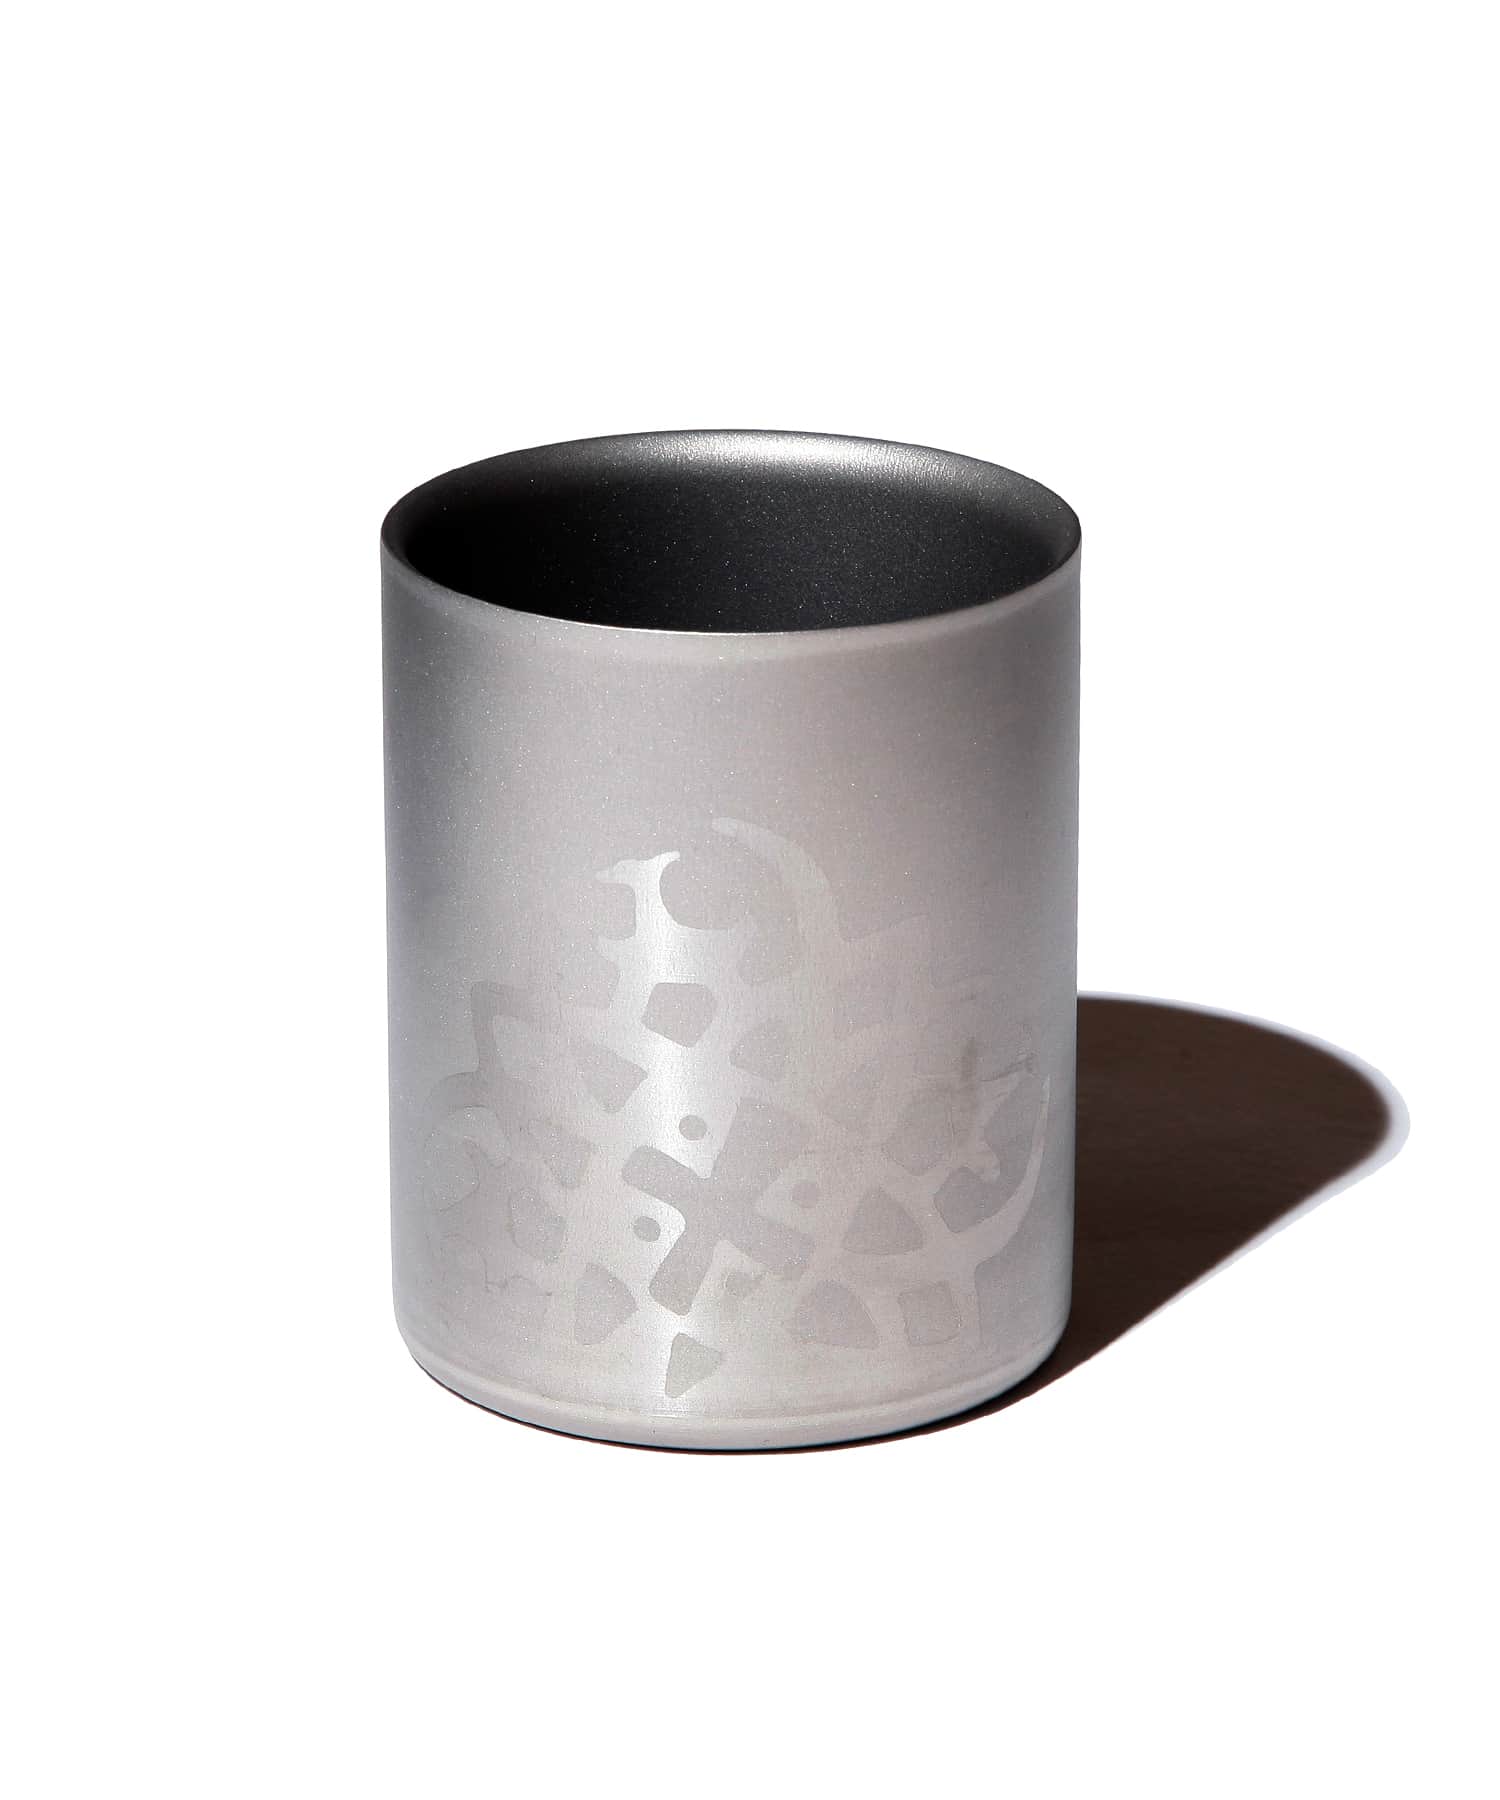 NORDISK Titanium Mug Double Wall 450ml / ノルディスク チタンダブル 